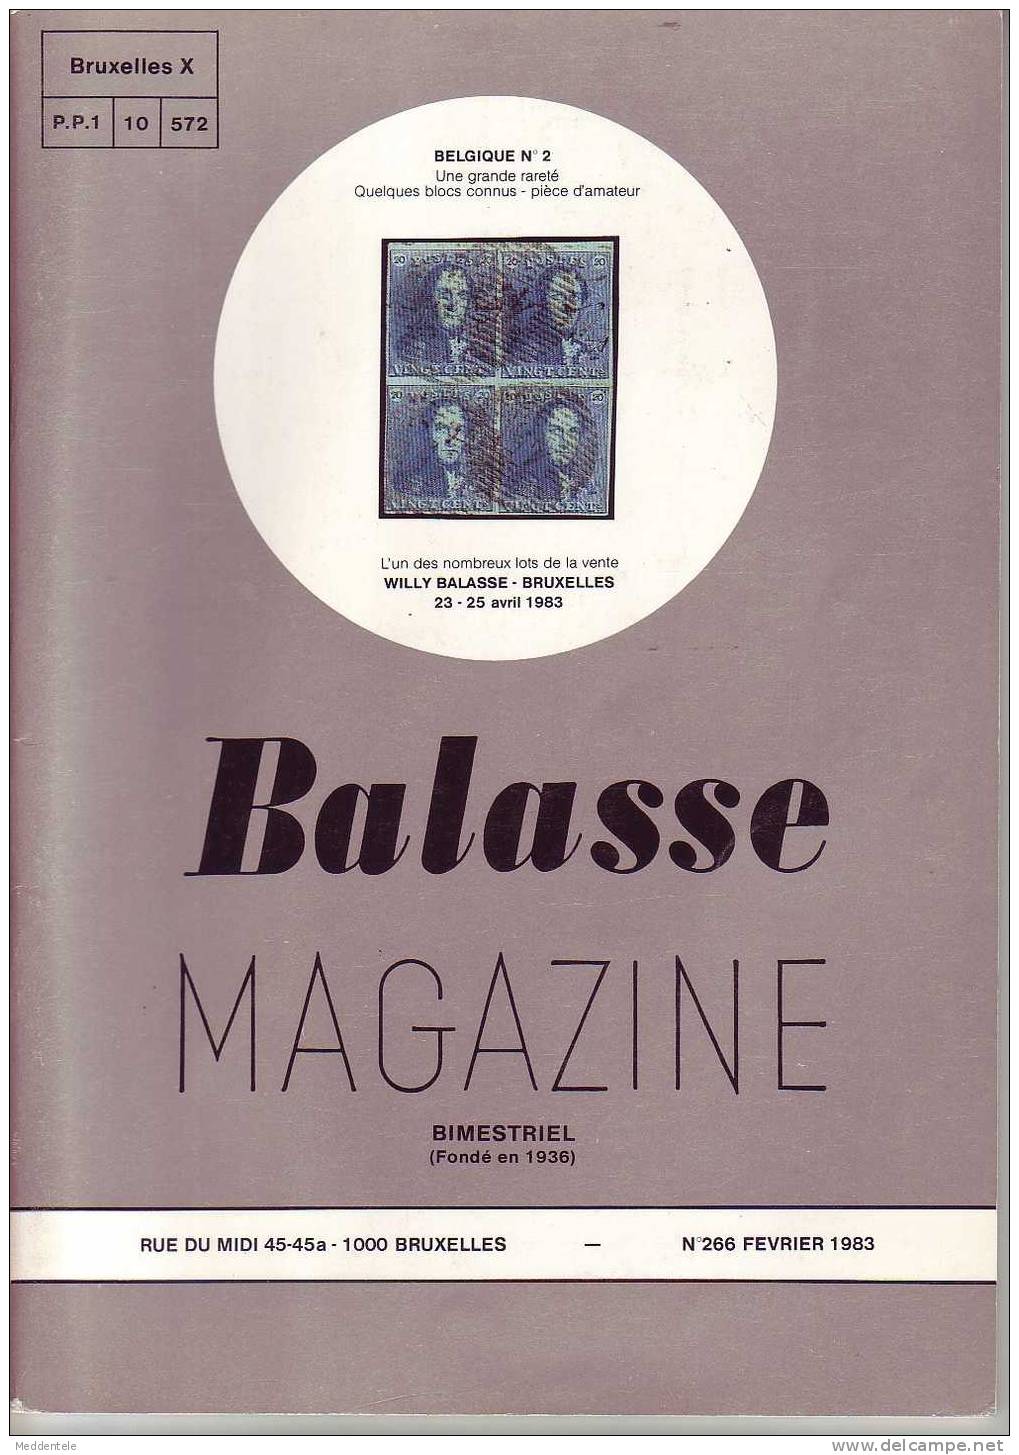 BALASSE MAGAZINE N° 266 - French (from 1941)